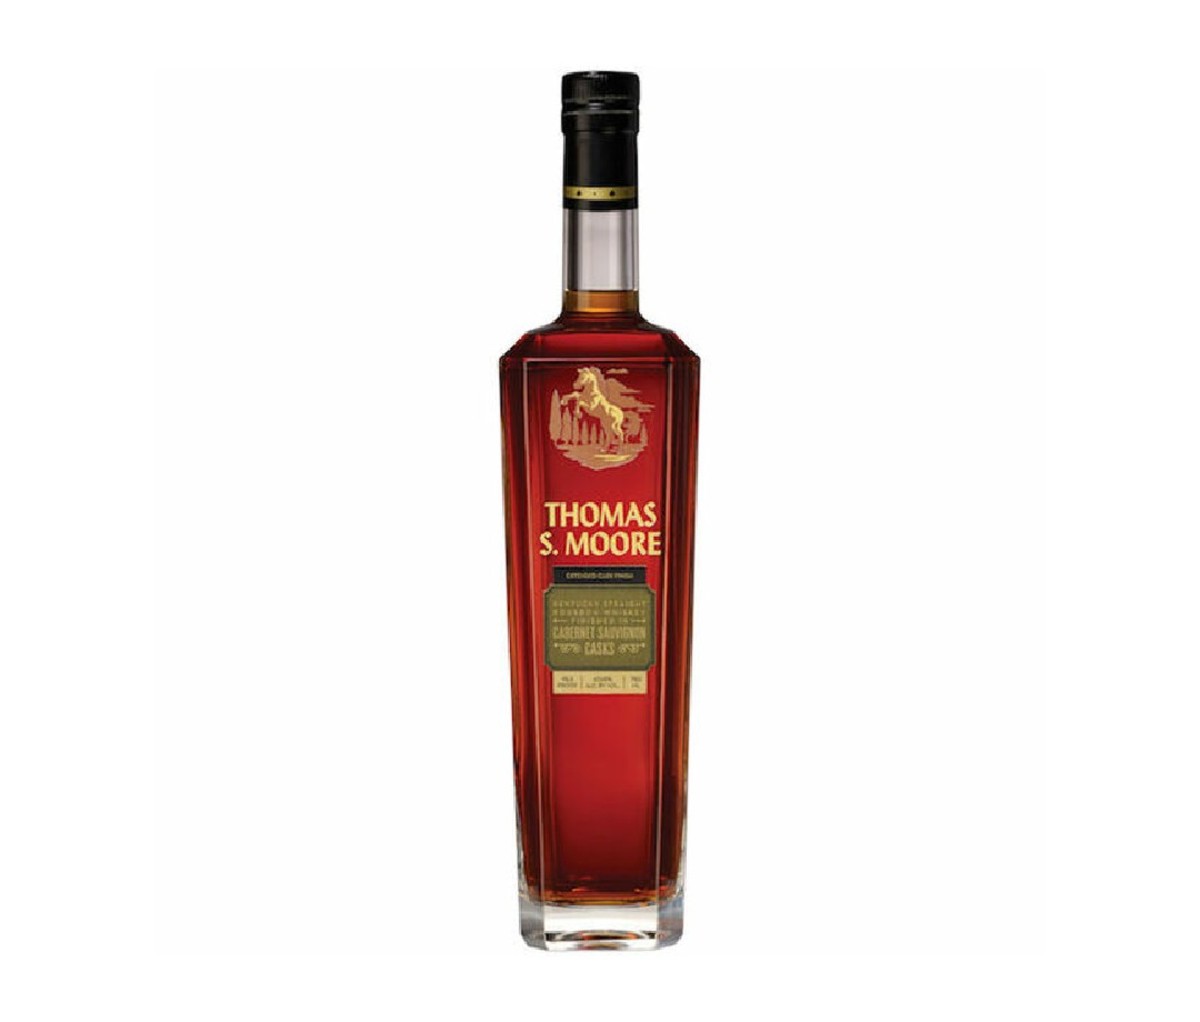 Bottle of Thomas S. Moore Cabernet Cask whiskey